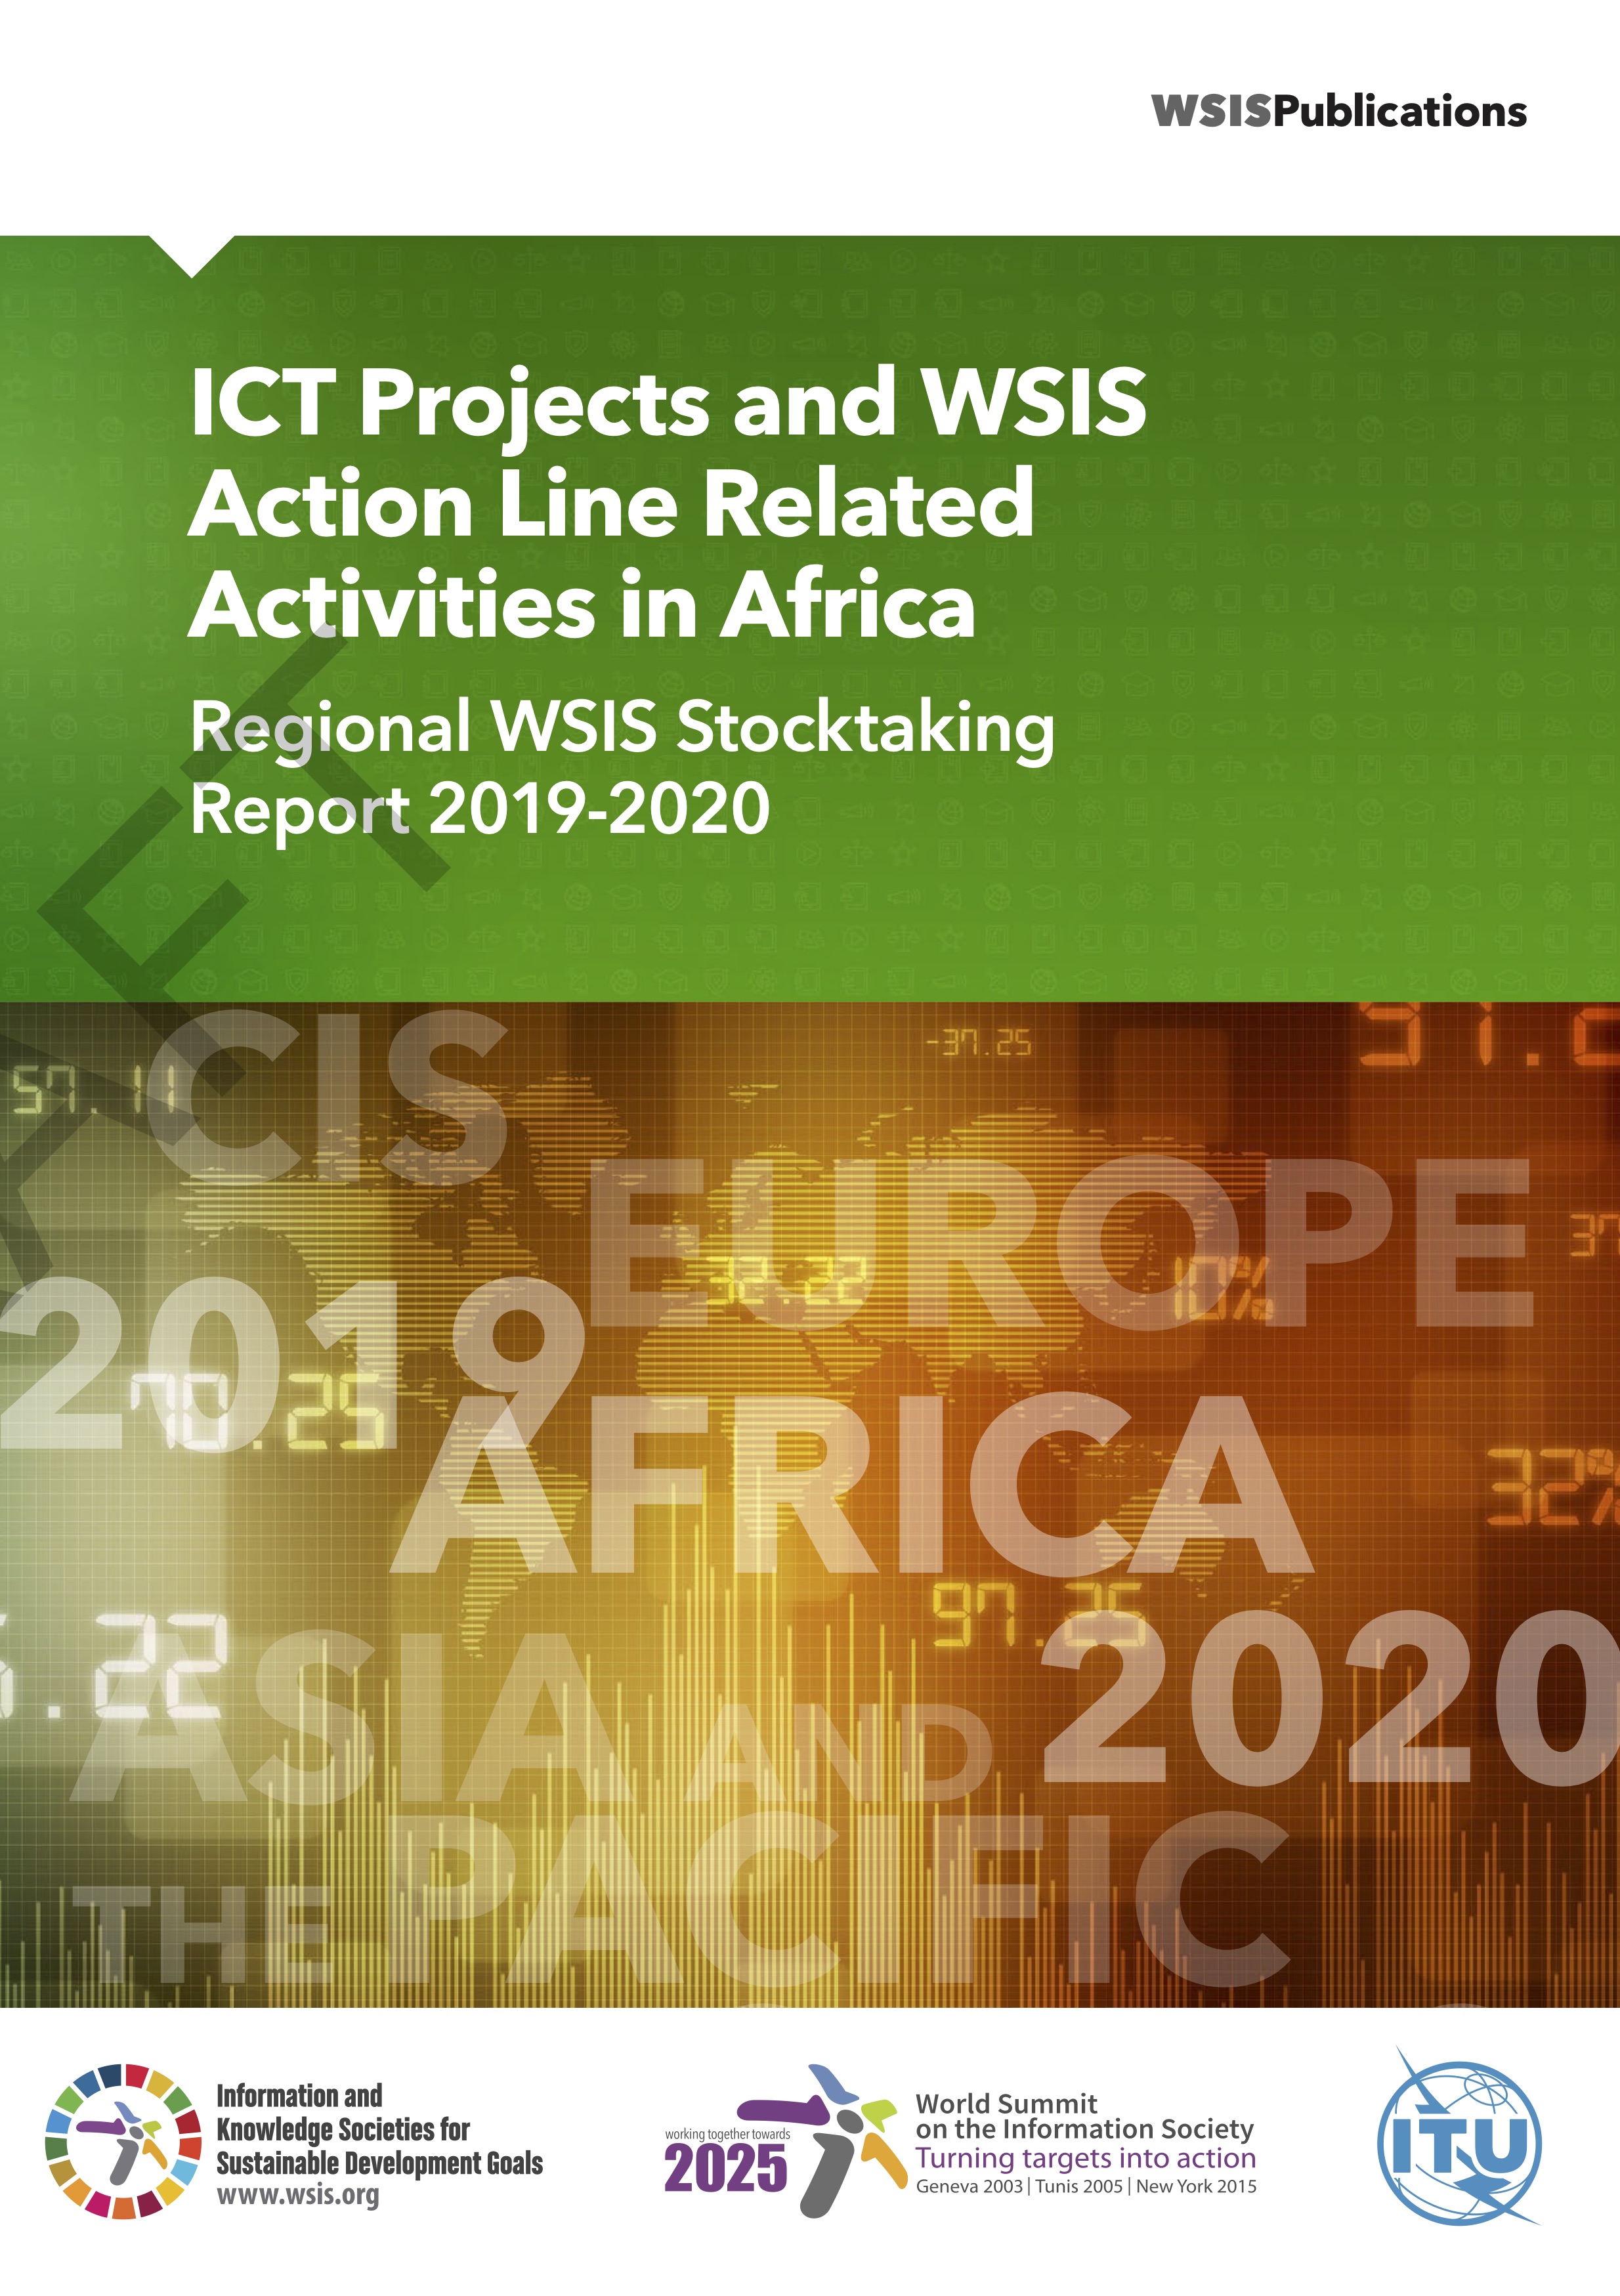 Regional WSIS Stocktaking Report 2019-2020 — Africa